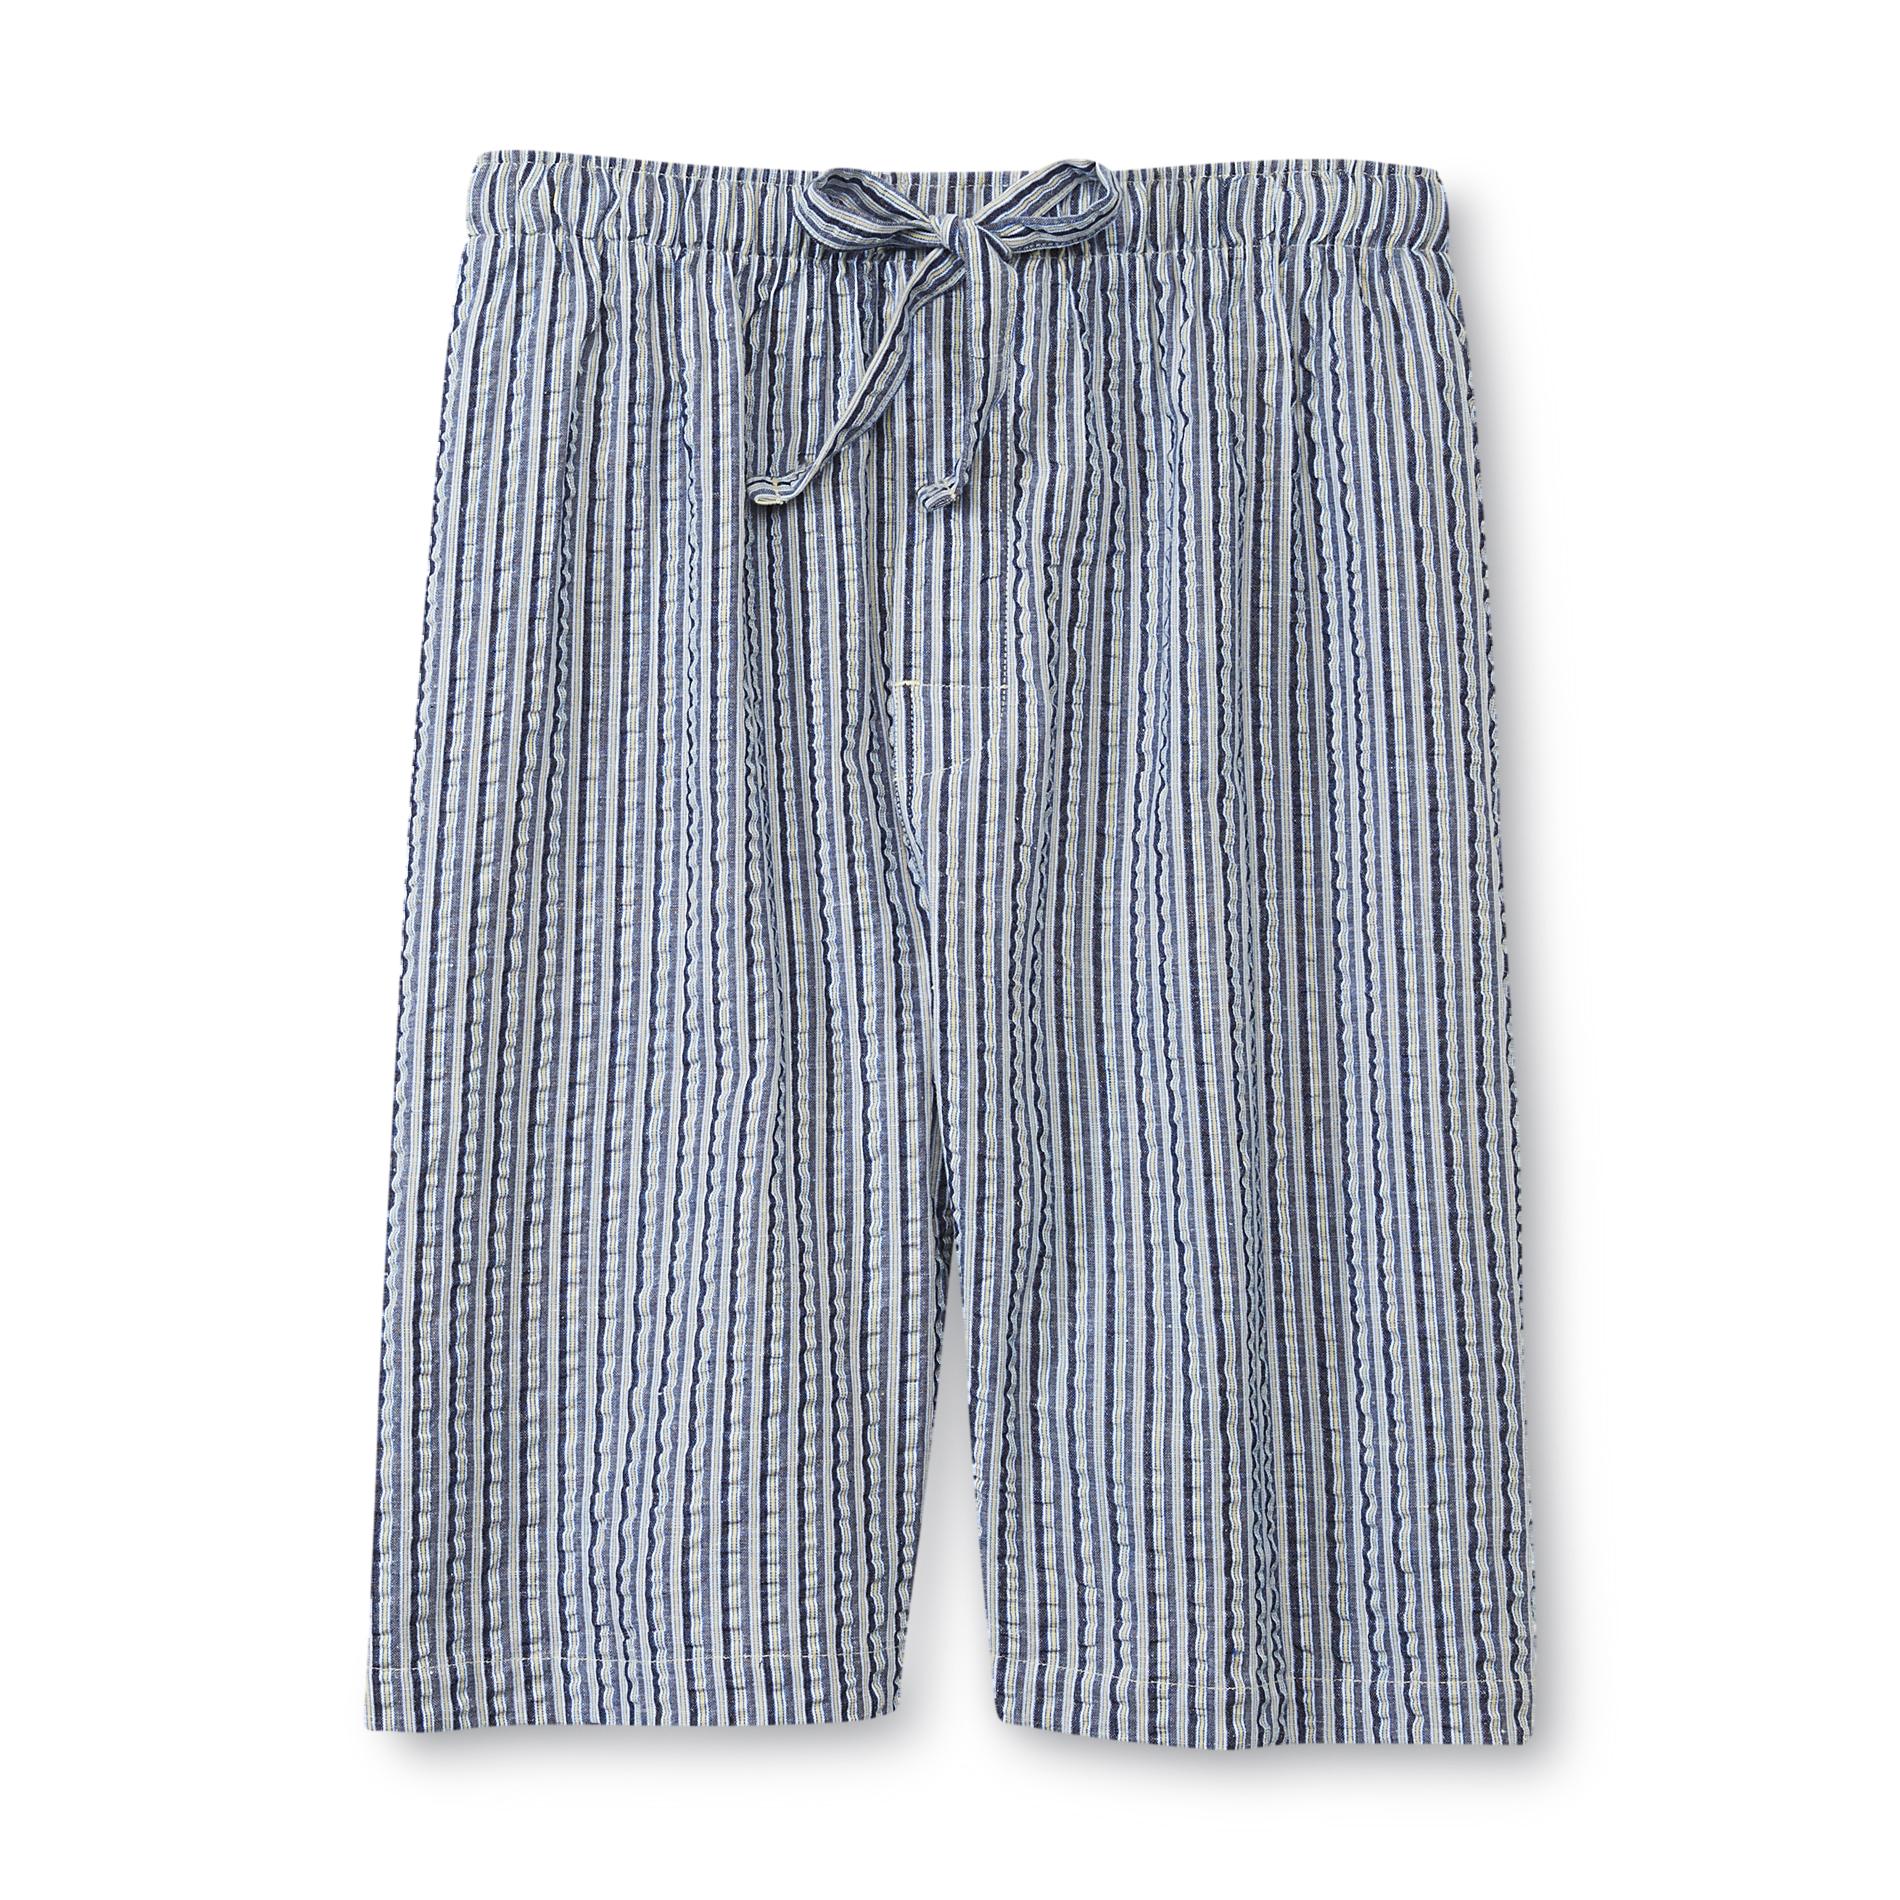 Covington Men's Striped Seersucker Lounge Shorts